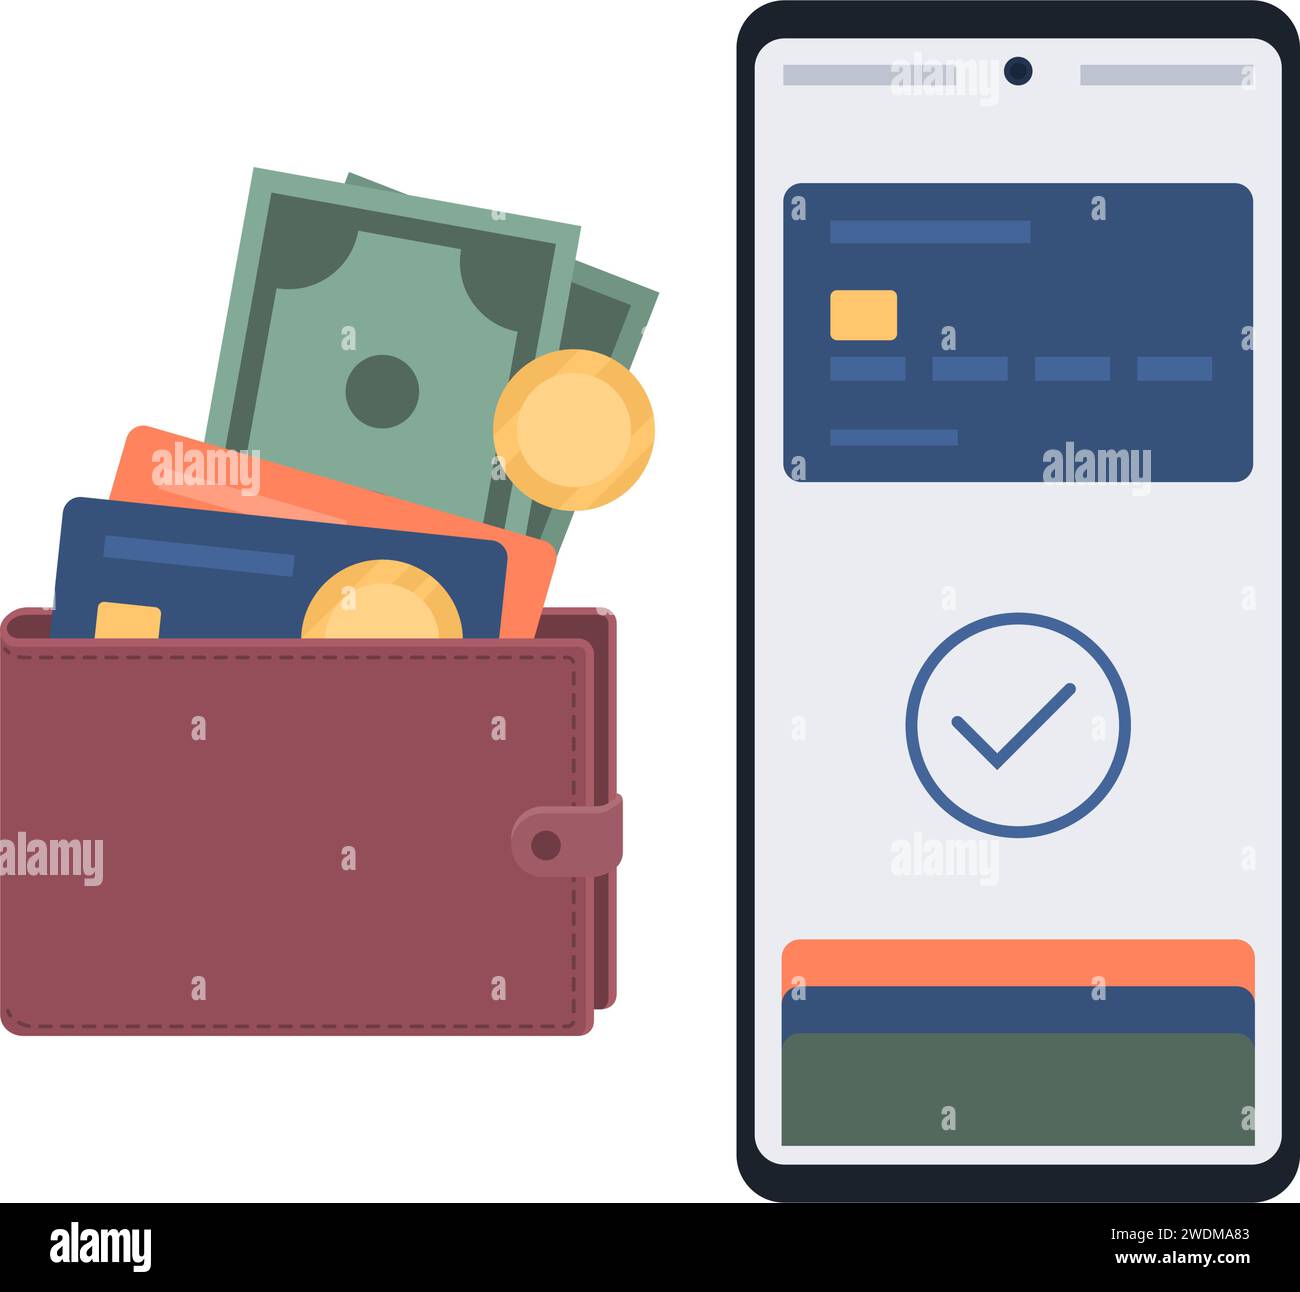 Digital wallet app on smartphone, wallet holding credit cards and cash money Stock Vector